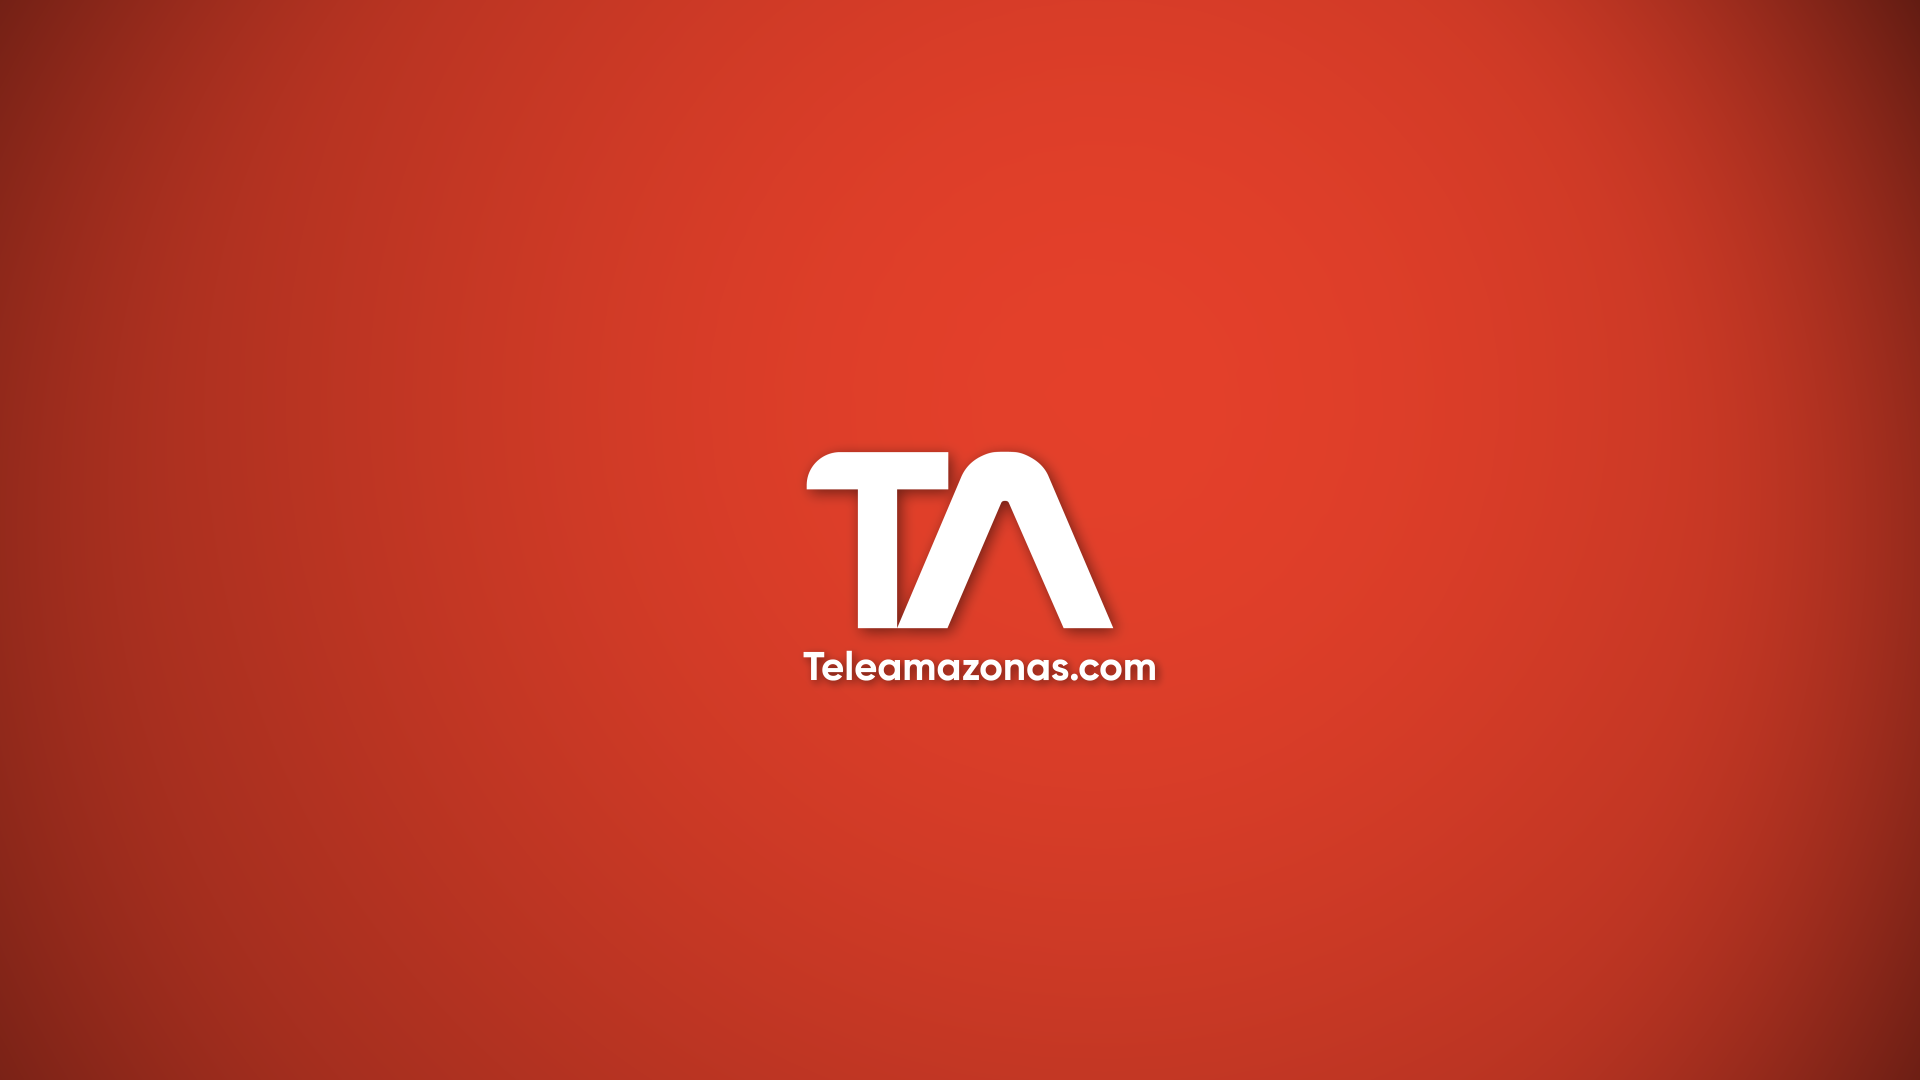 (c) Teleamazonas.com